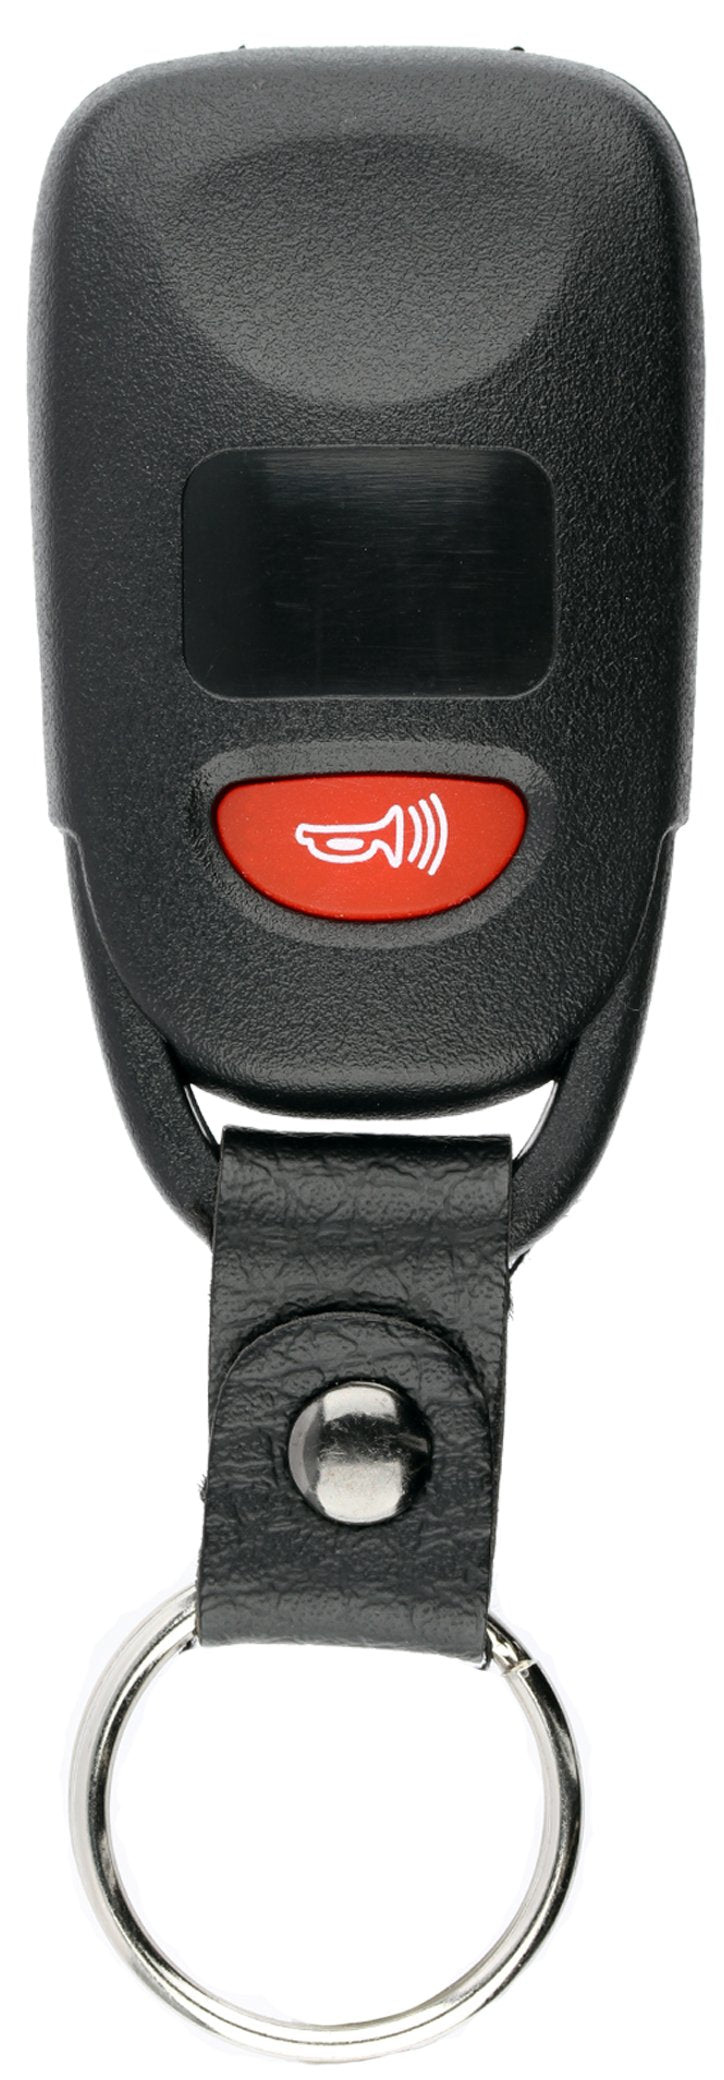  [AUSTRALIA] - KeylessOption Keyless Entry Remote Car Key Fob Alarm for Hyundai Santa Fe Accent, Kia Rio Rio5 PINHA-T038